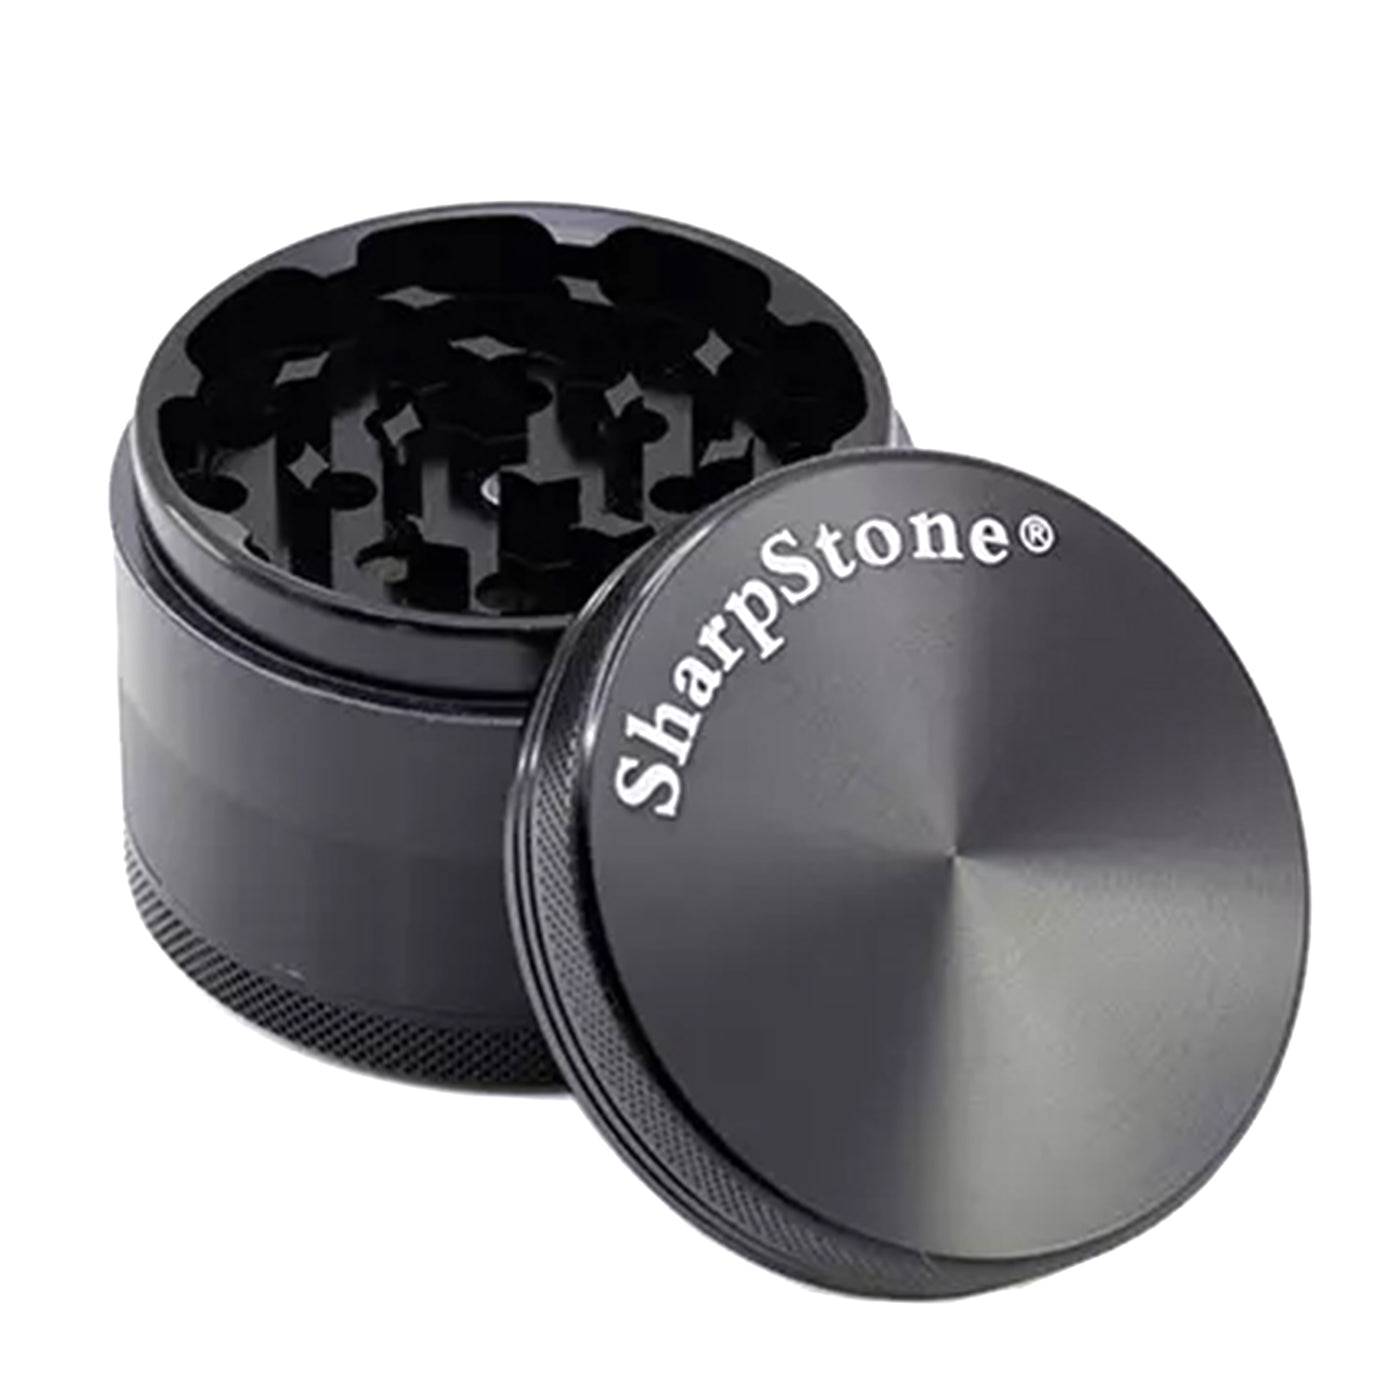 Sharpstone 4 Piece Grinders Solid Top Black